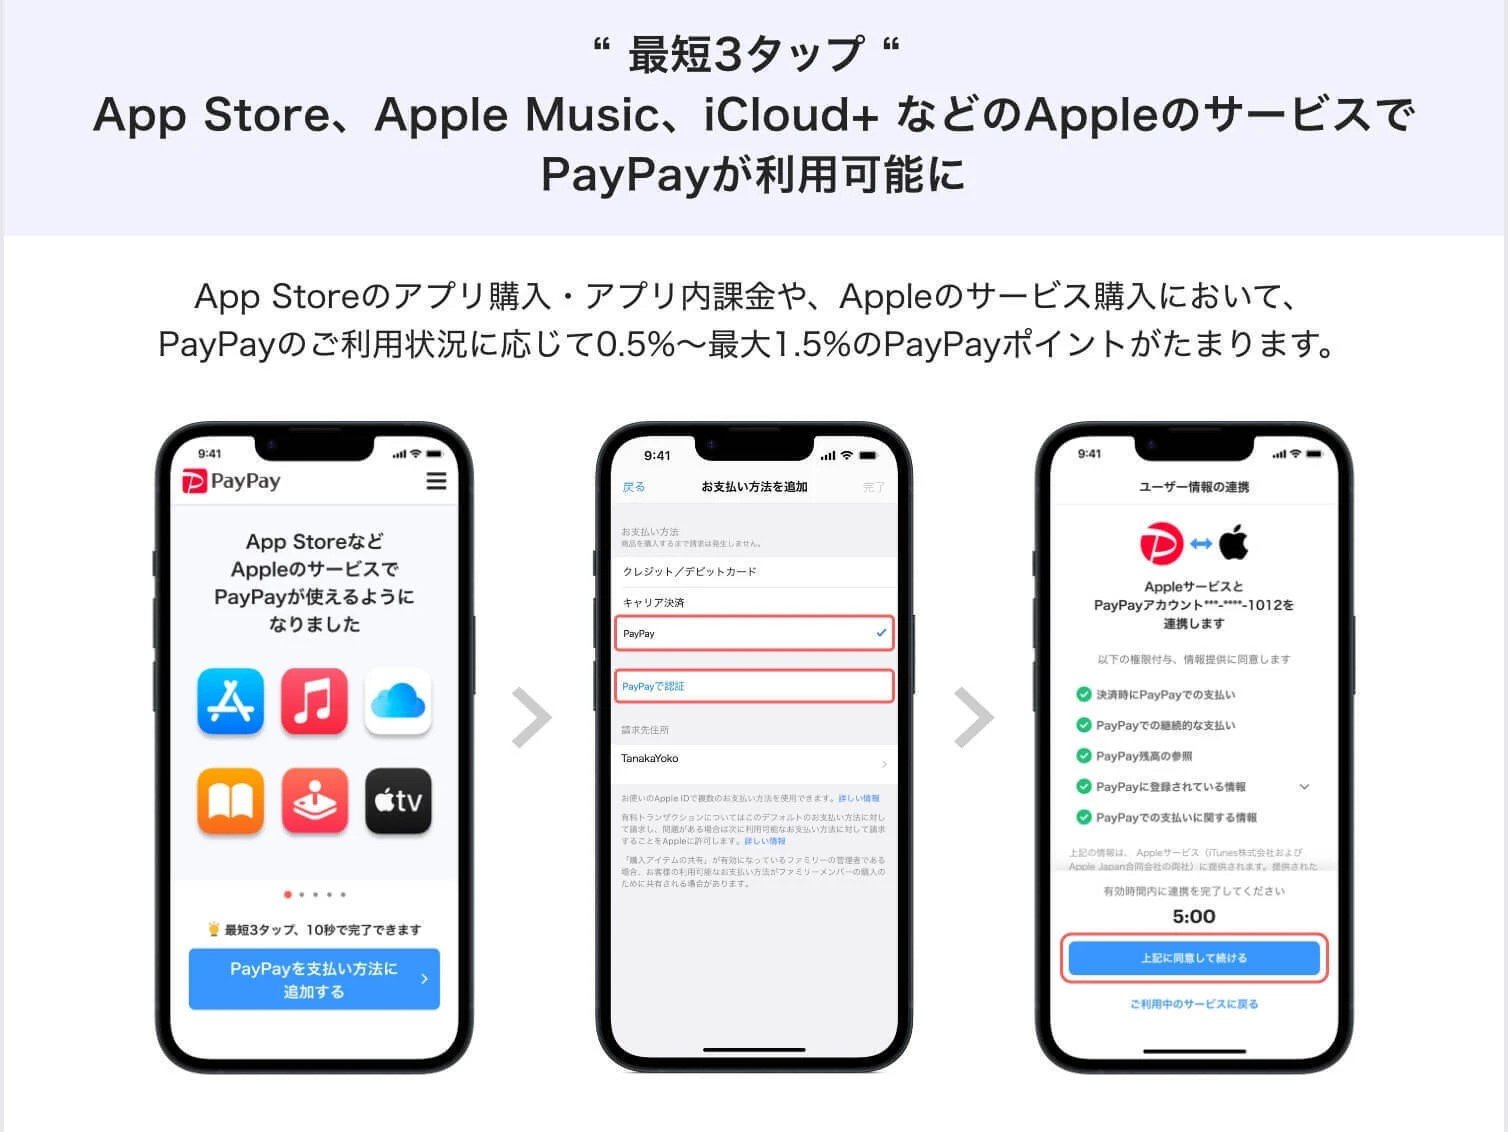 PayPayでApp StoreやApple Musicなどの支払い可能に　コード決済対応は日本初　ポイントもたまる